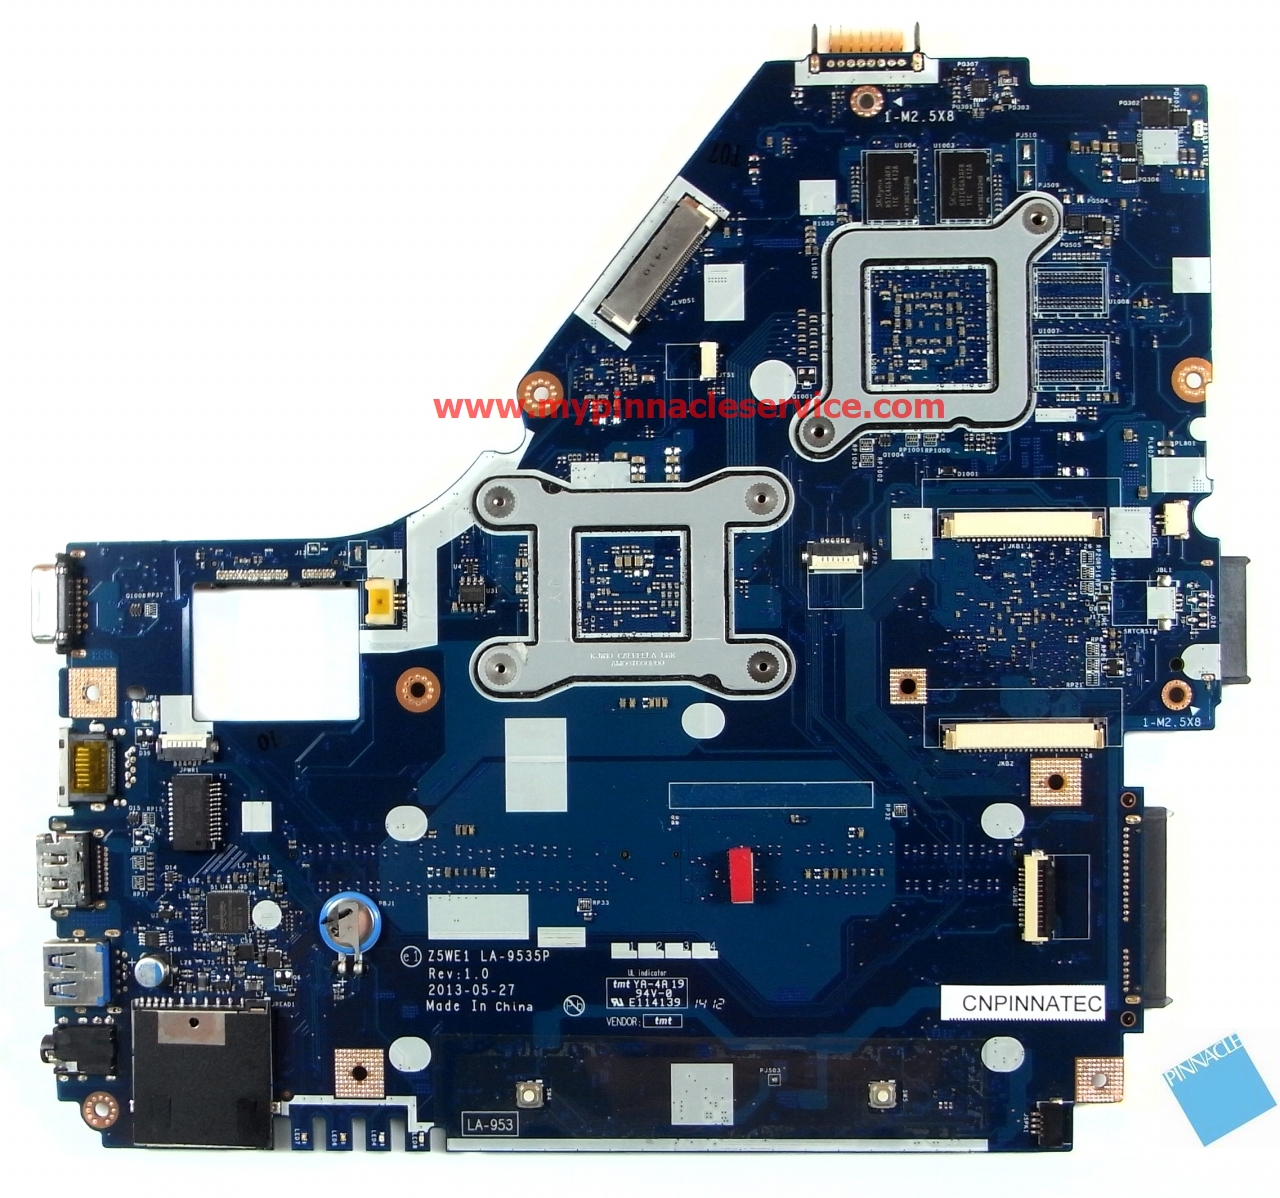 nbmes11001-motherboard-for-acer-aspire-e1-570-e1-570g-la-9535p-i3-3217u-gt740m-r0013262.jpg